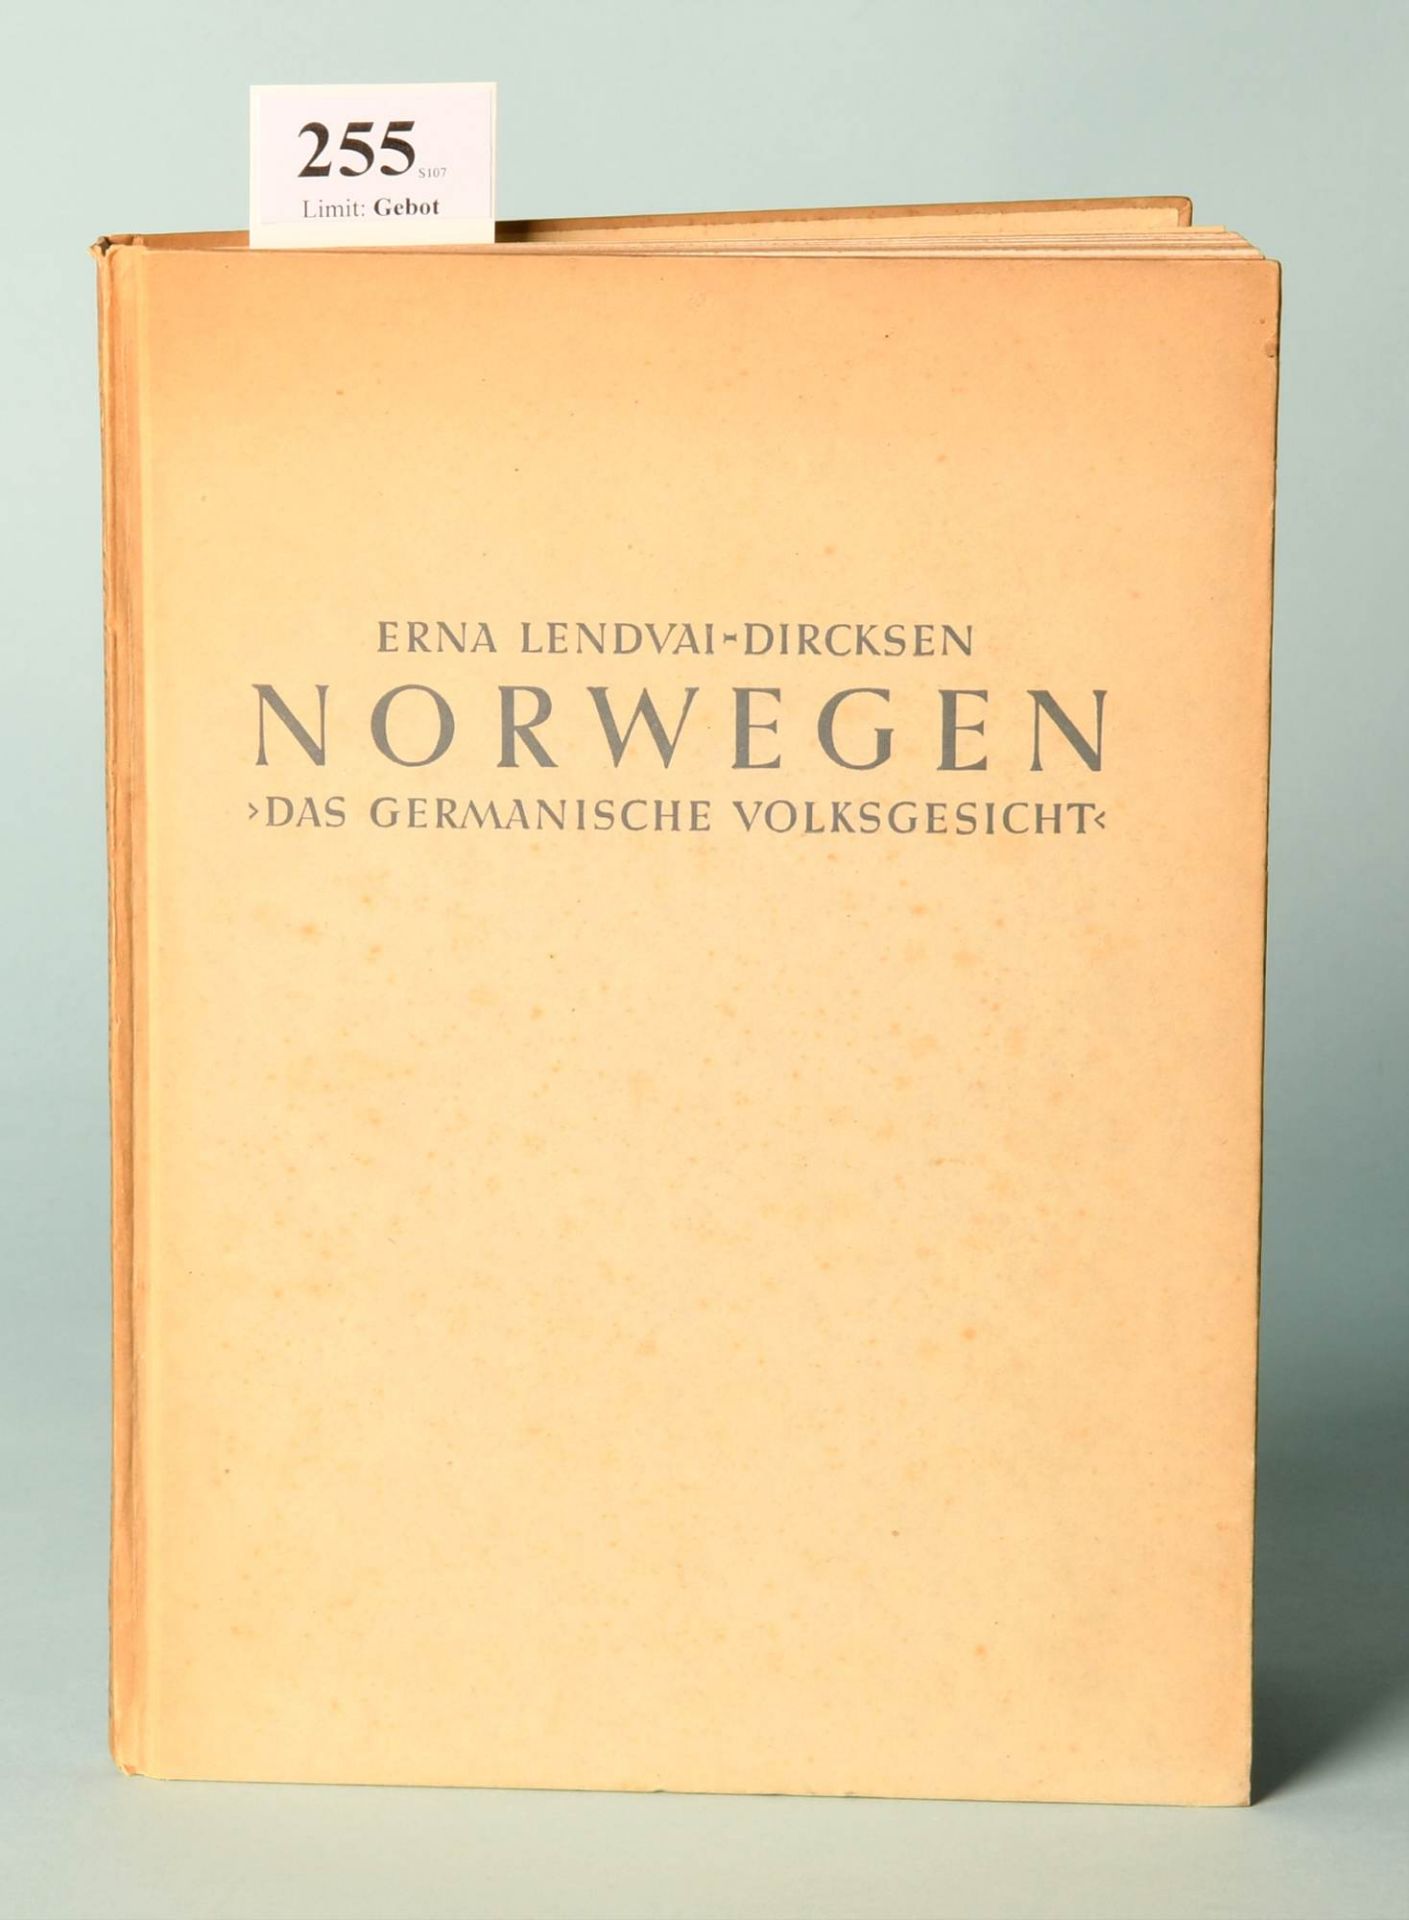 Lendvai-Dircksen, Erna "Das Germanische Volksgesicht - Norwegen"